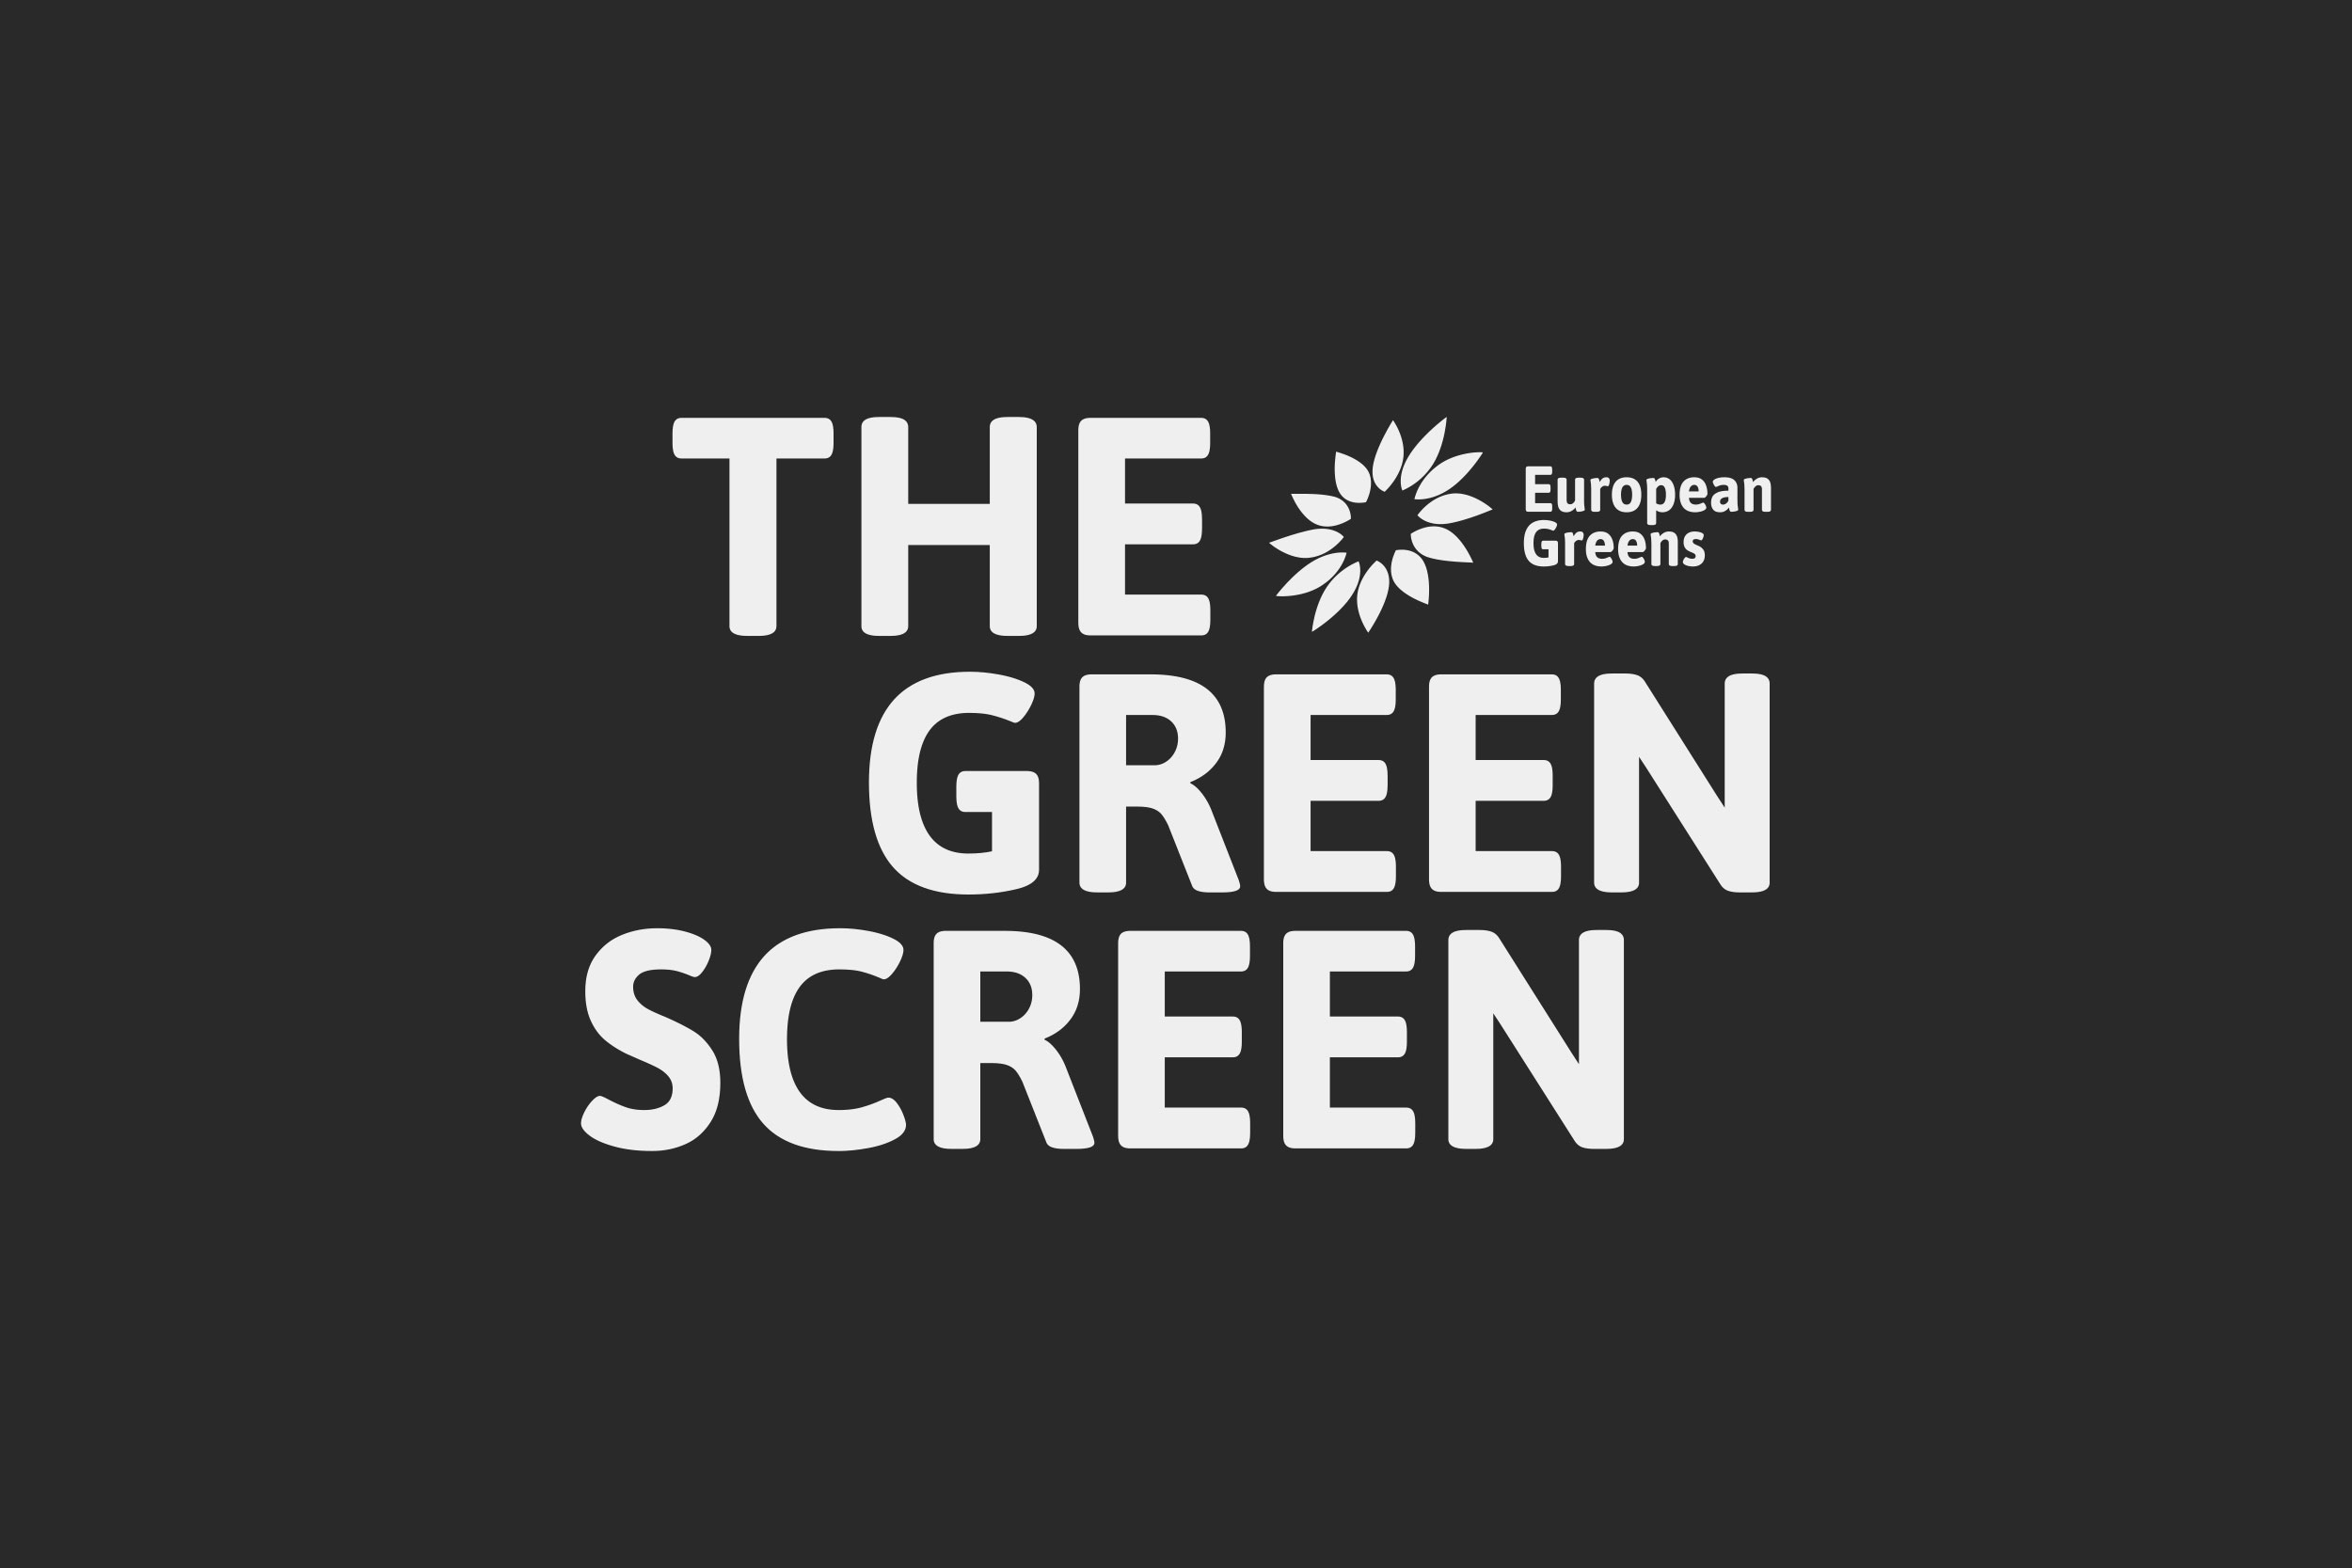 Porta-Disseny-Logos-The-Green-Screen-European-Greens-01